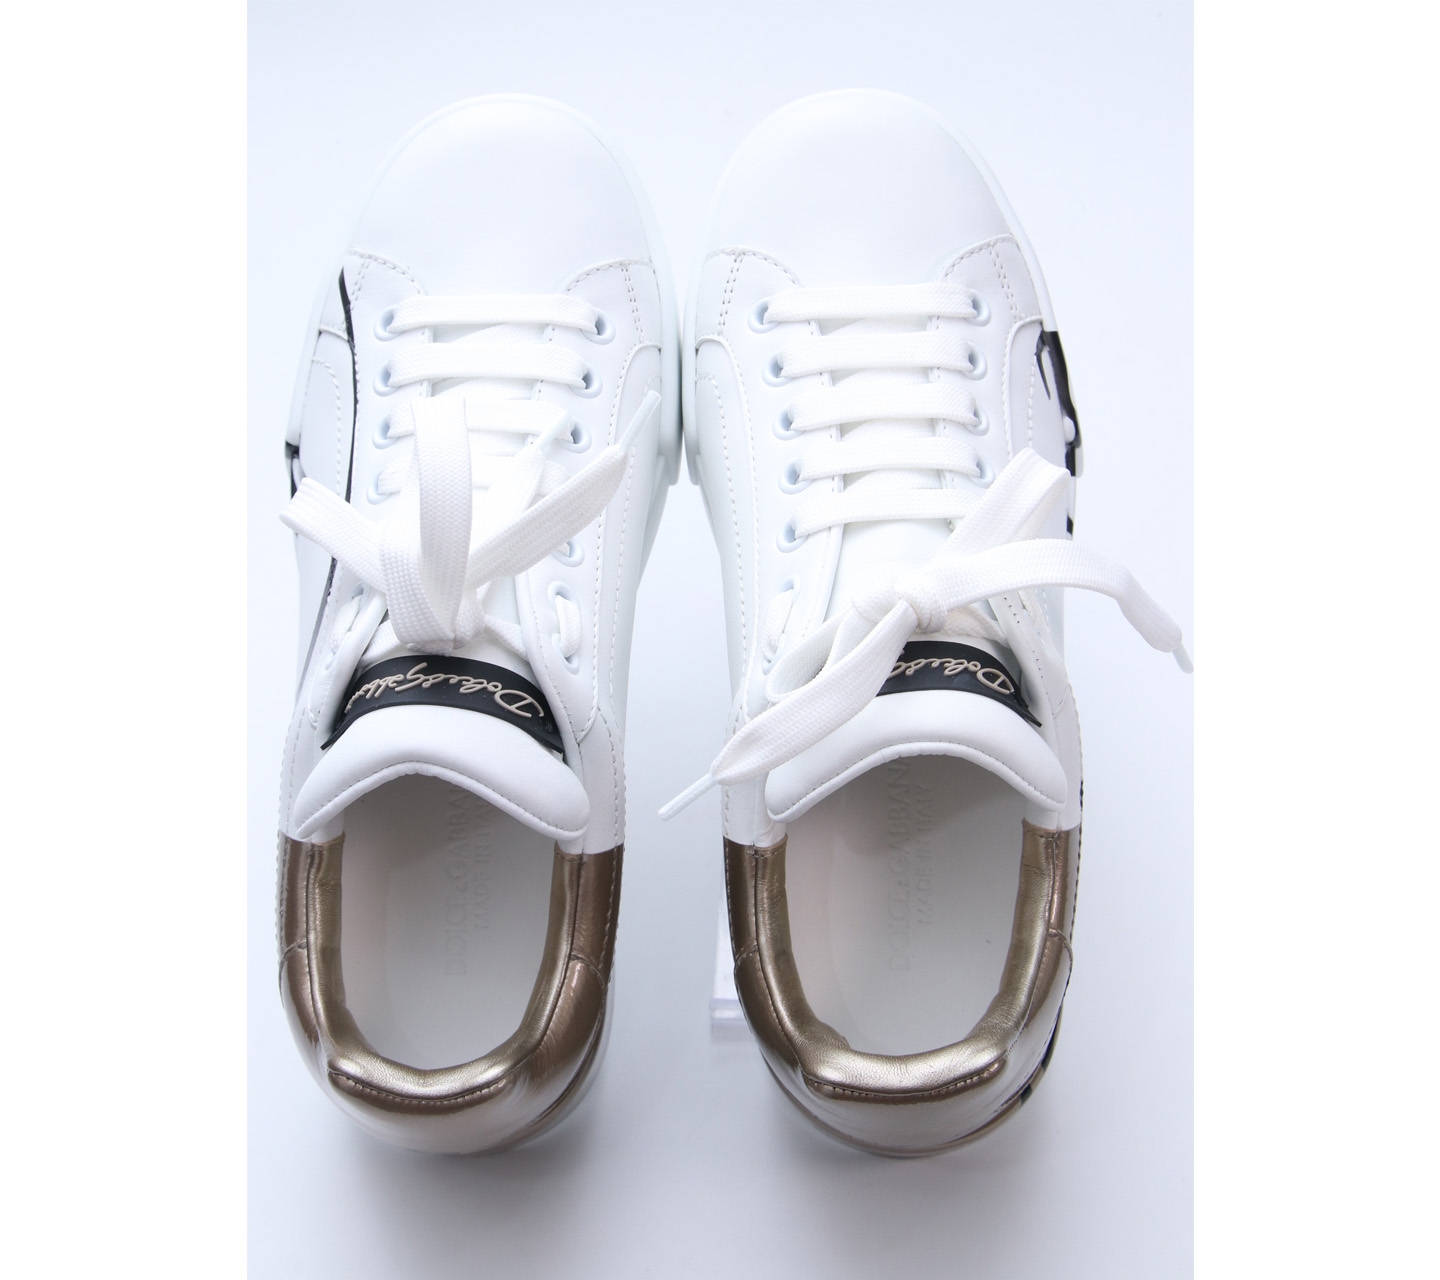 Dolce & Gabbana White & Gold Portofino Light Sneakers